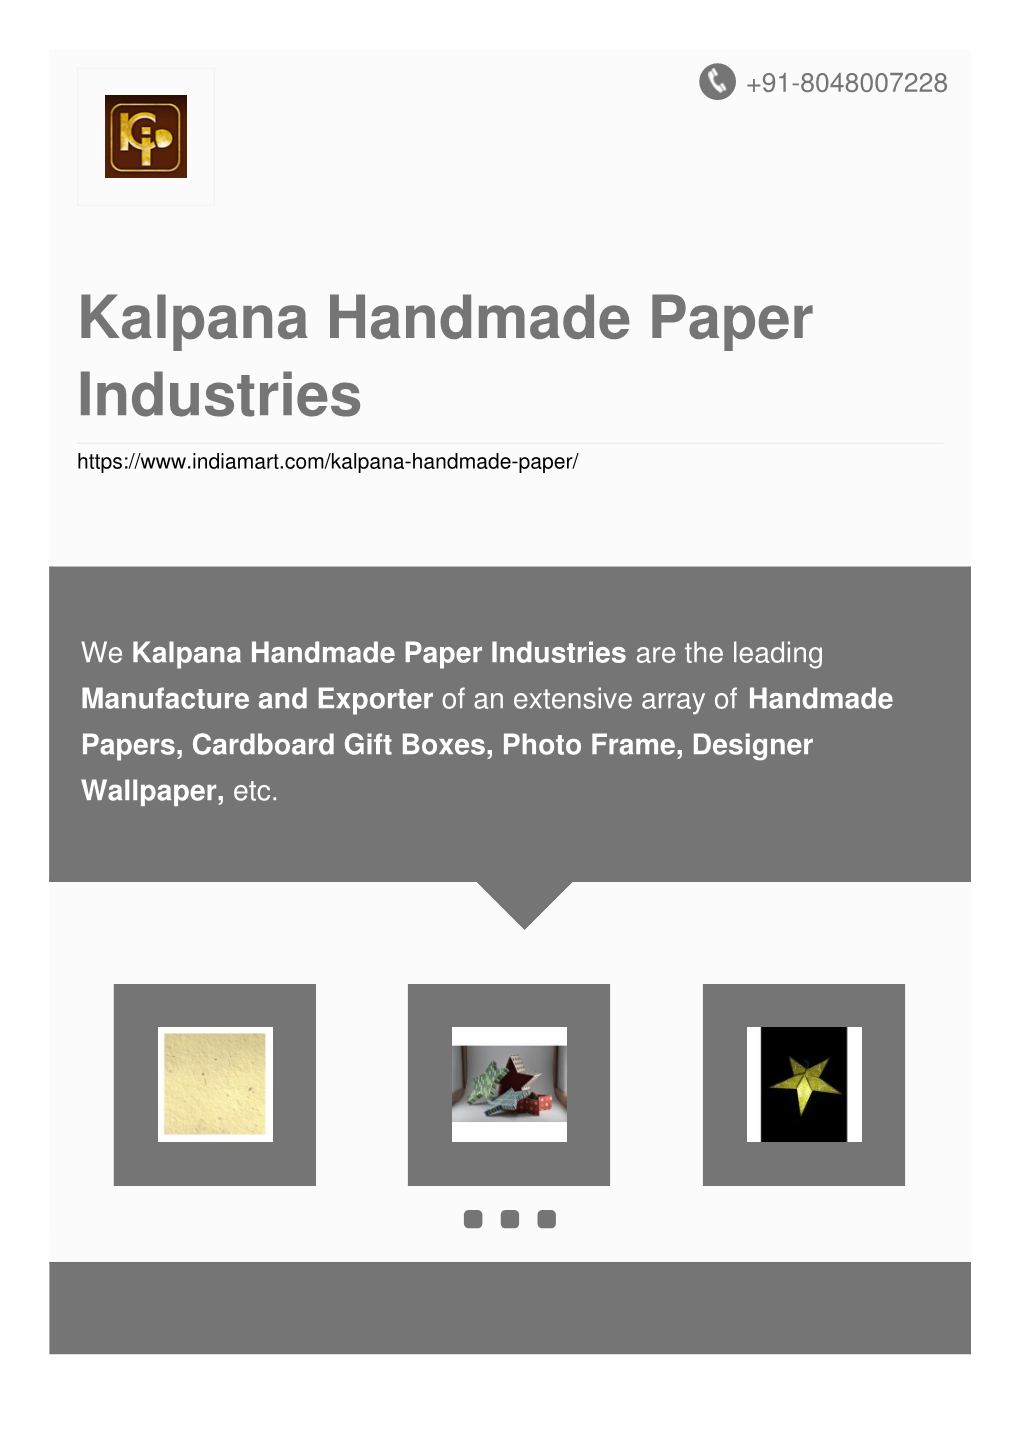 Kalpana Handmade Paper Industries